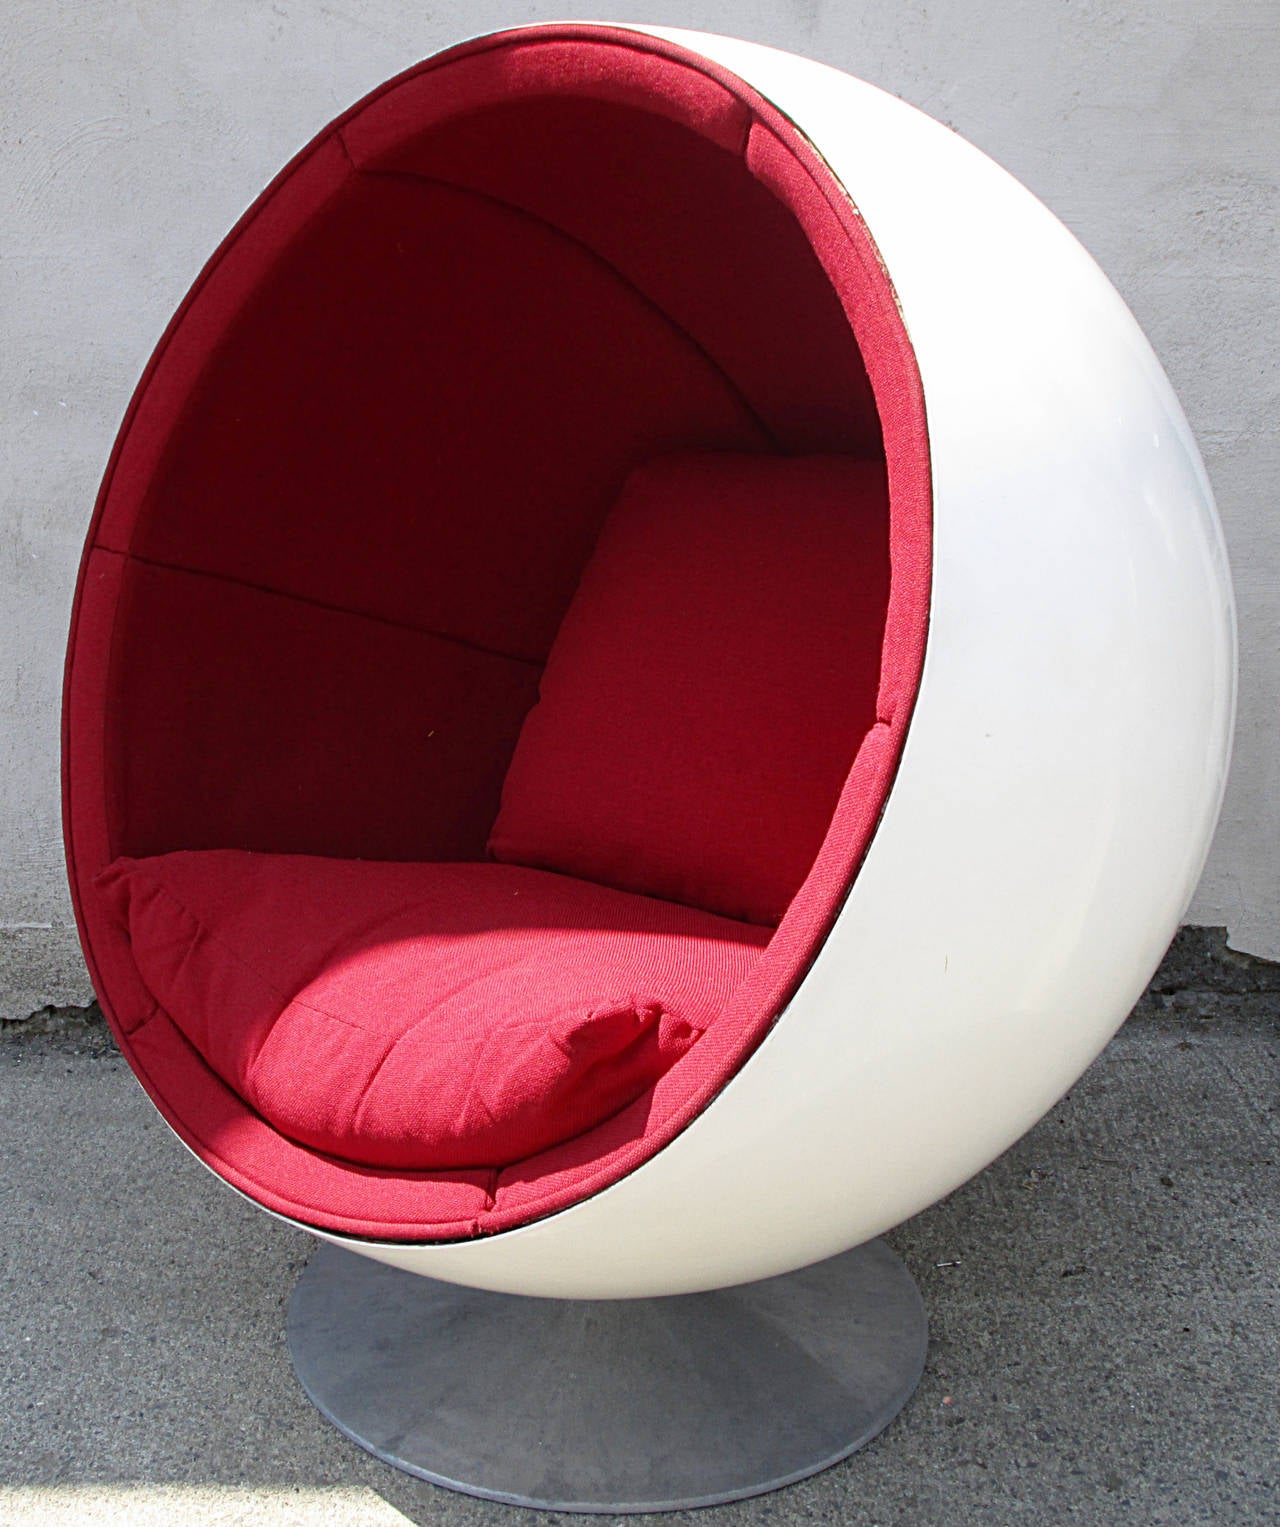 Mid-Century Modern Ball Chair by Eero Aarnio